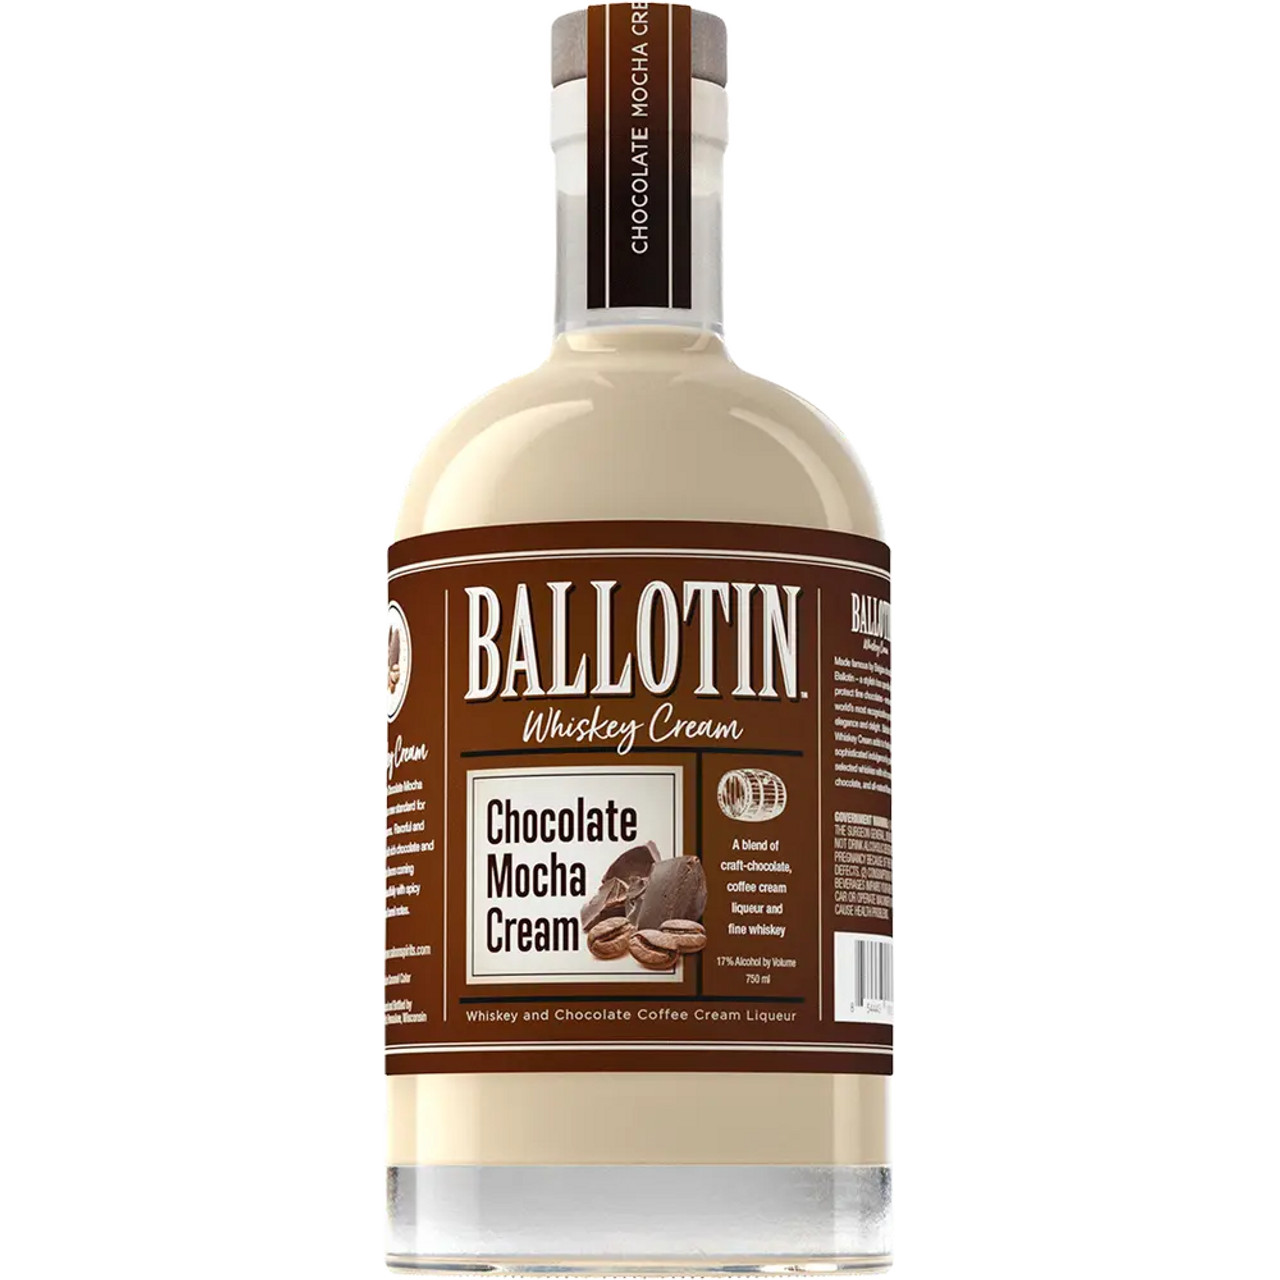 Ballotin Whiskey Cream Chocolate Mocha Cream 750 ML